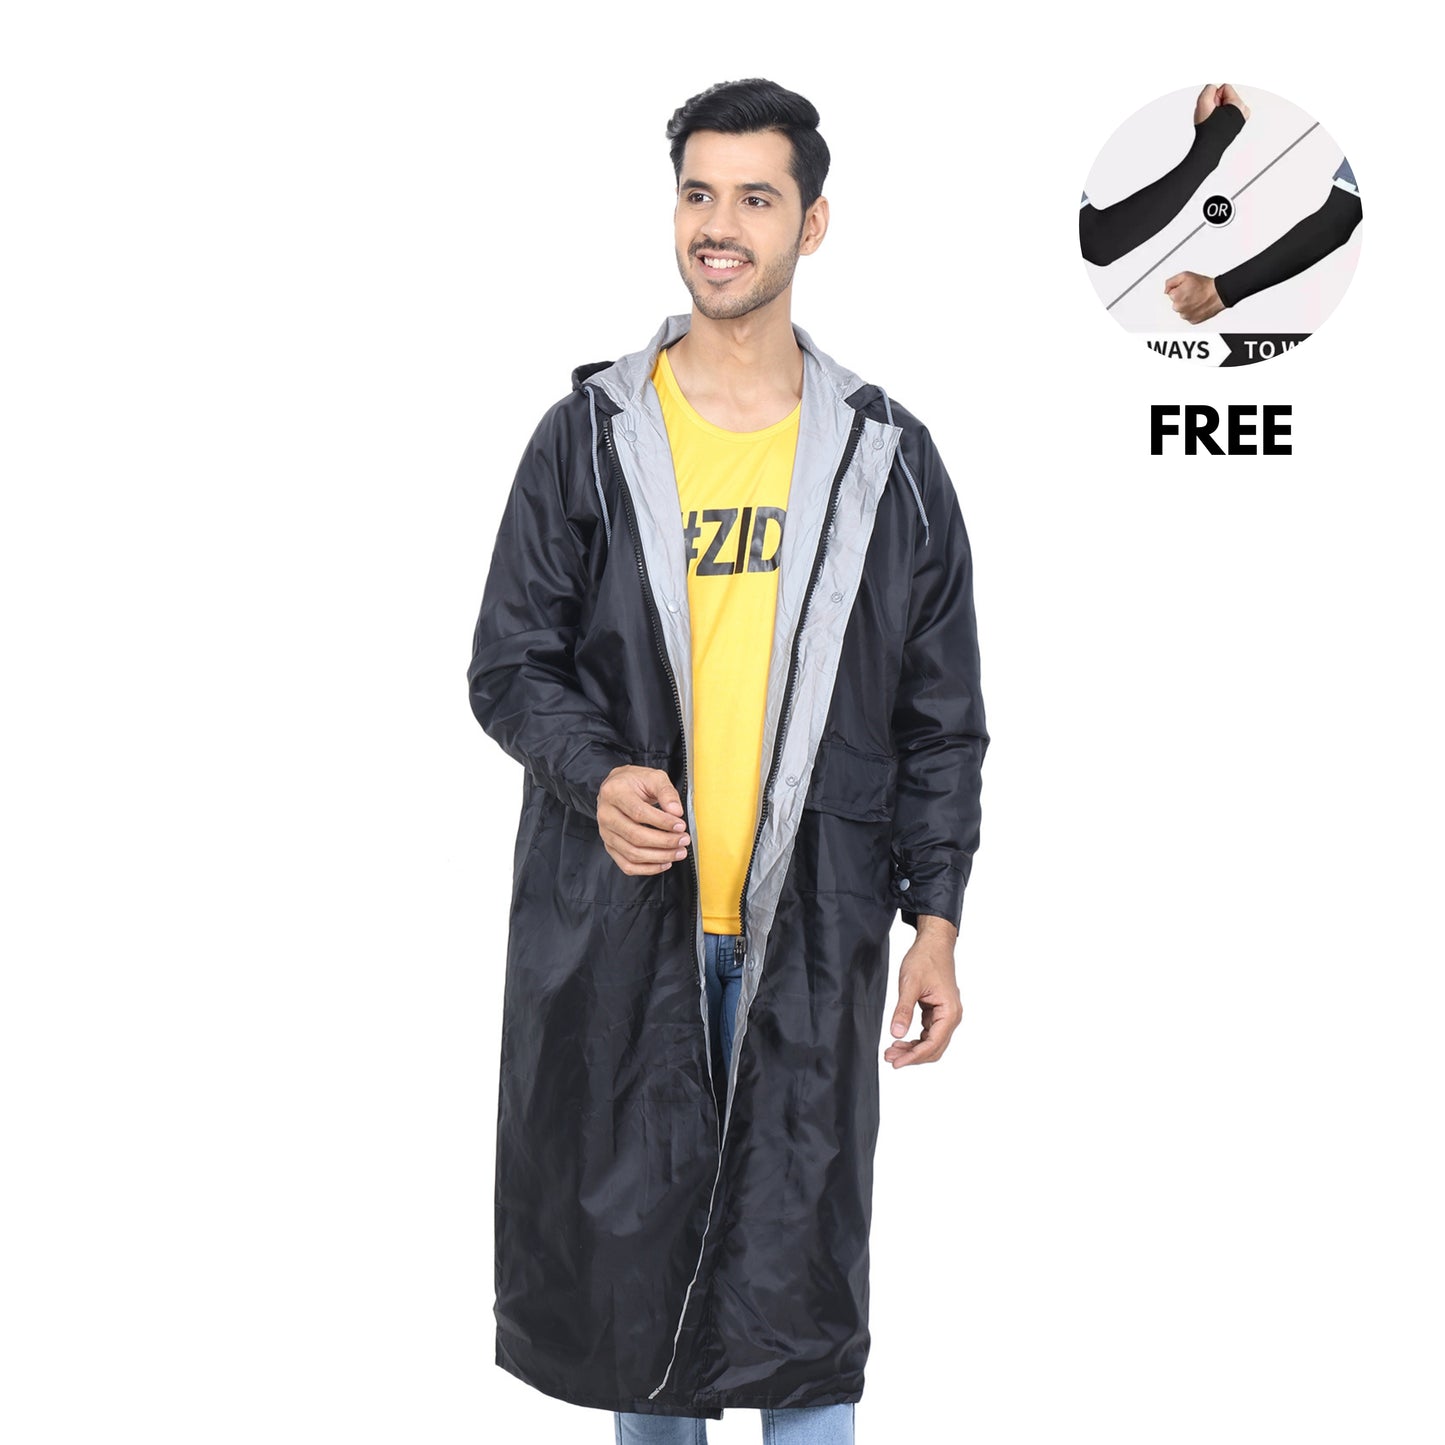 YOUTH ROBE Men's Long Raincoat (Free Arm Sleeves)